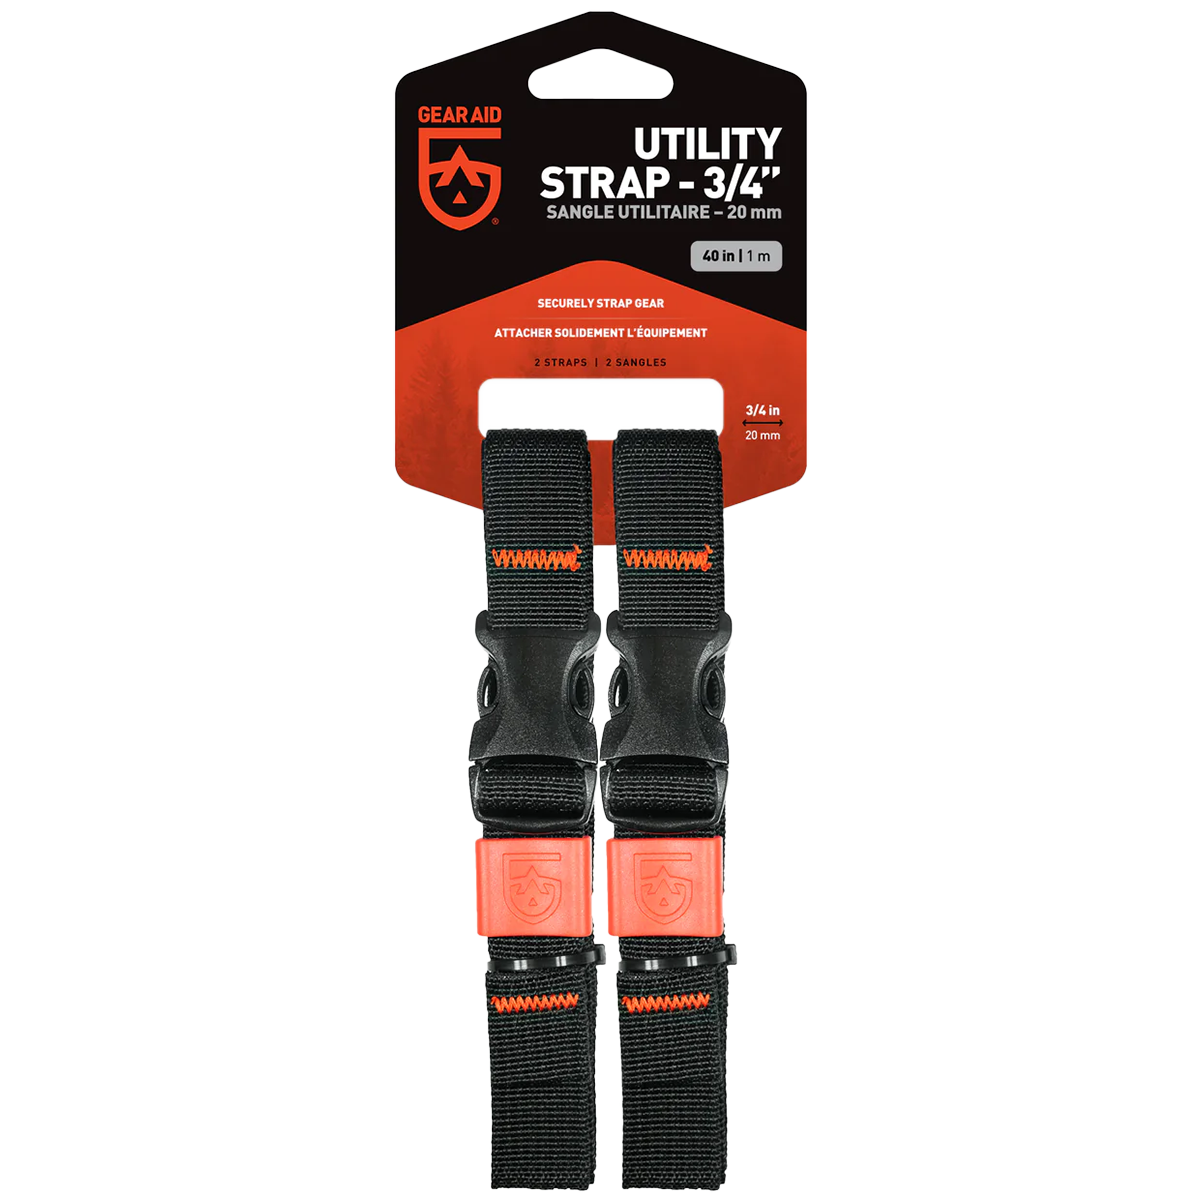 Utility Strap 3/4 inch - 40in alternate view